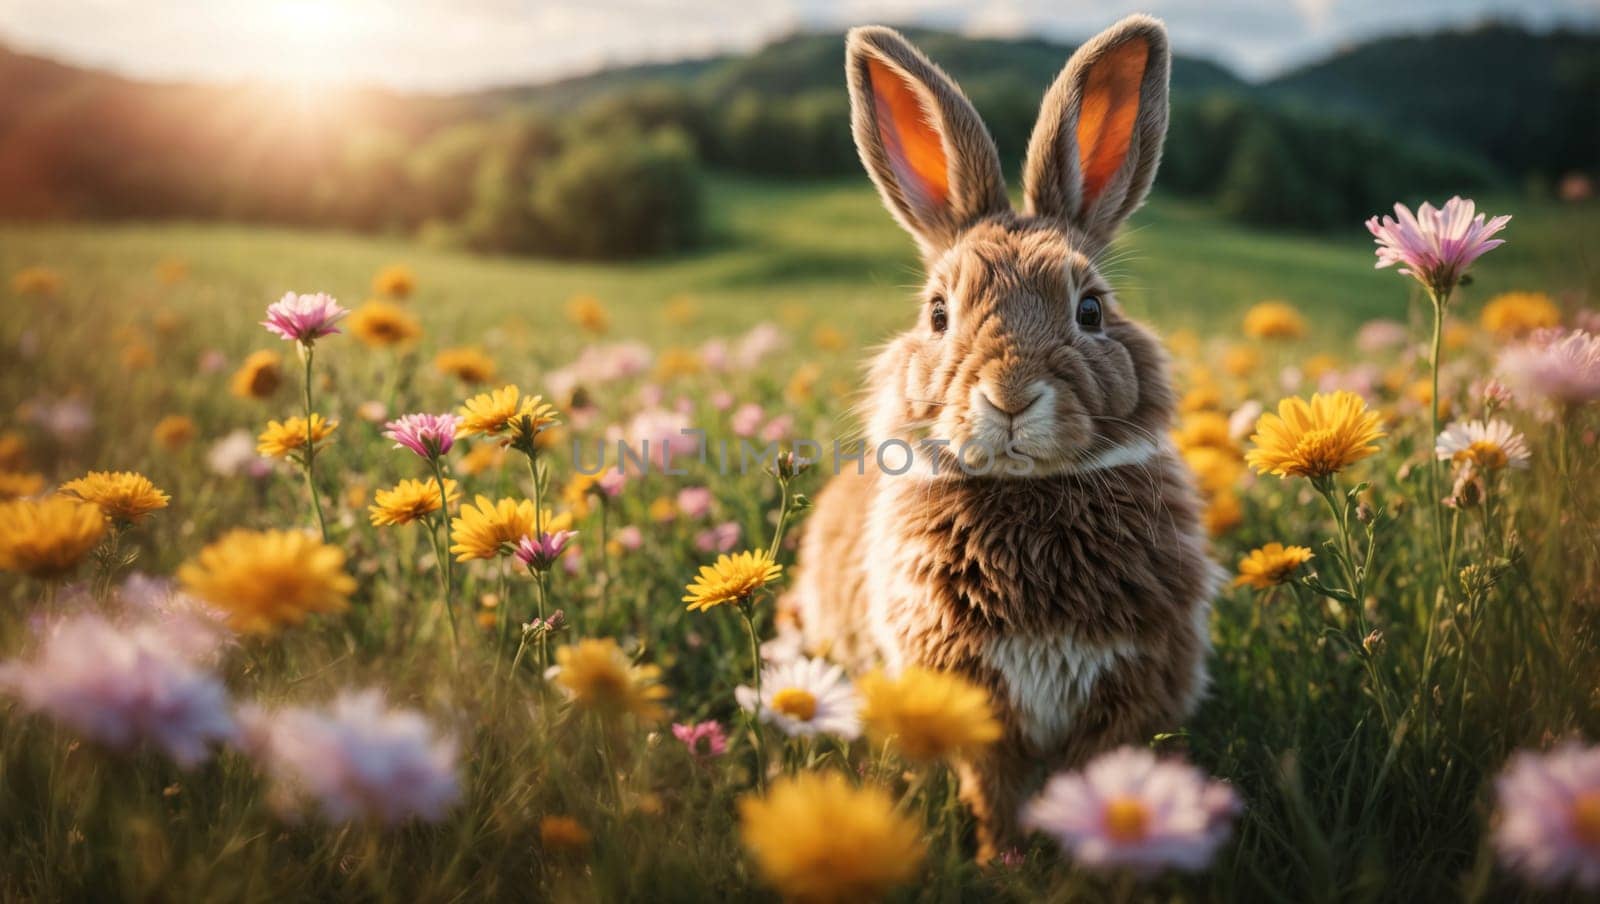 A cute rabbit in a beautiful meadow with flowers by Севостьянов